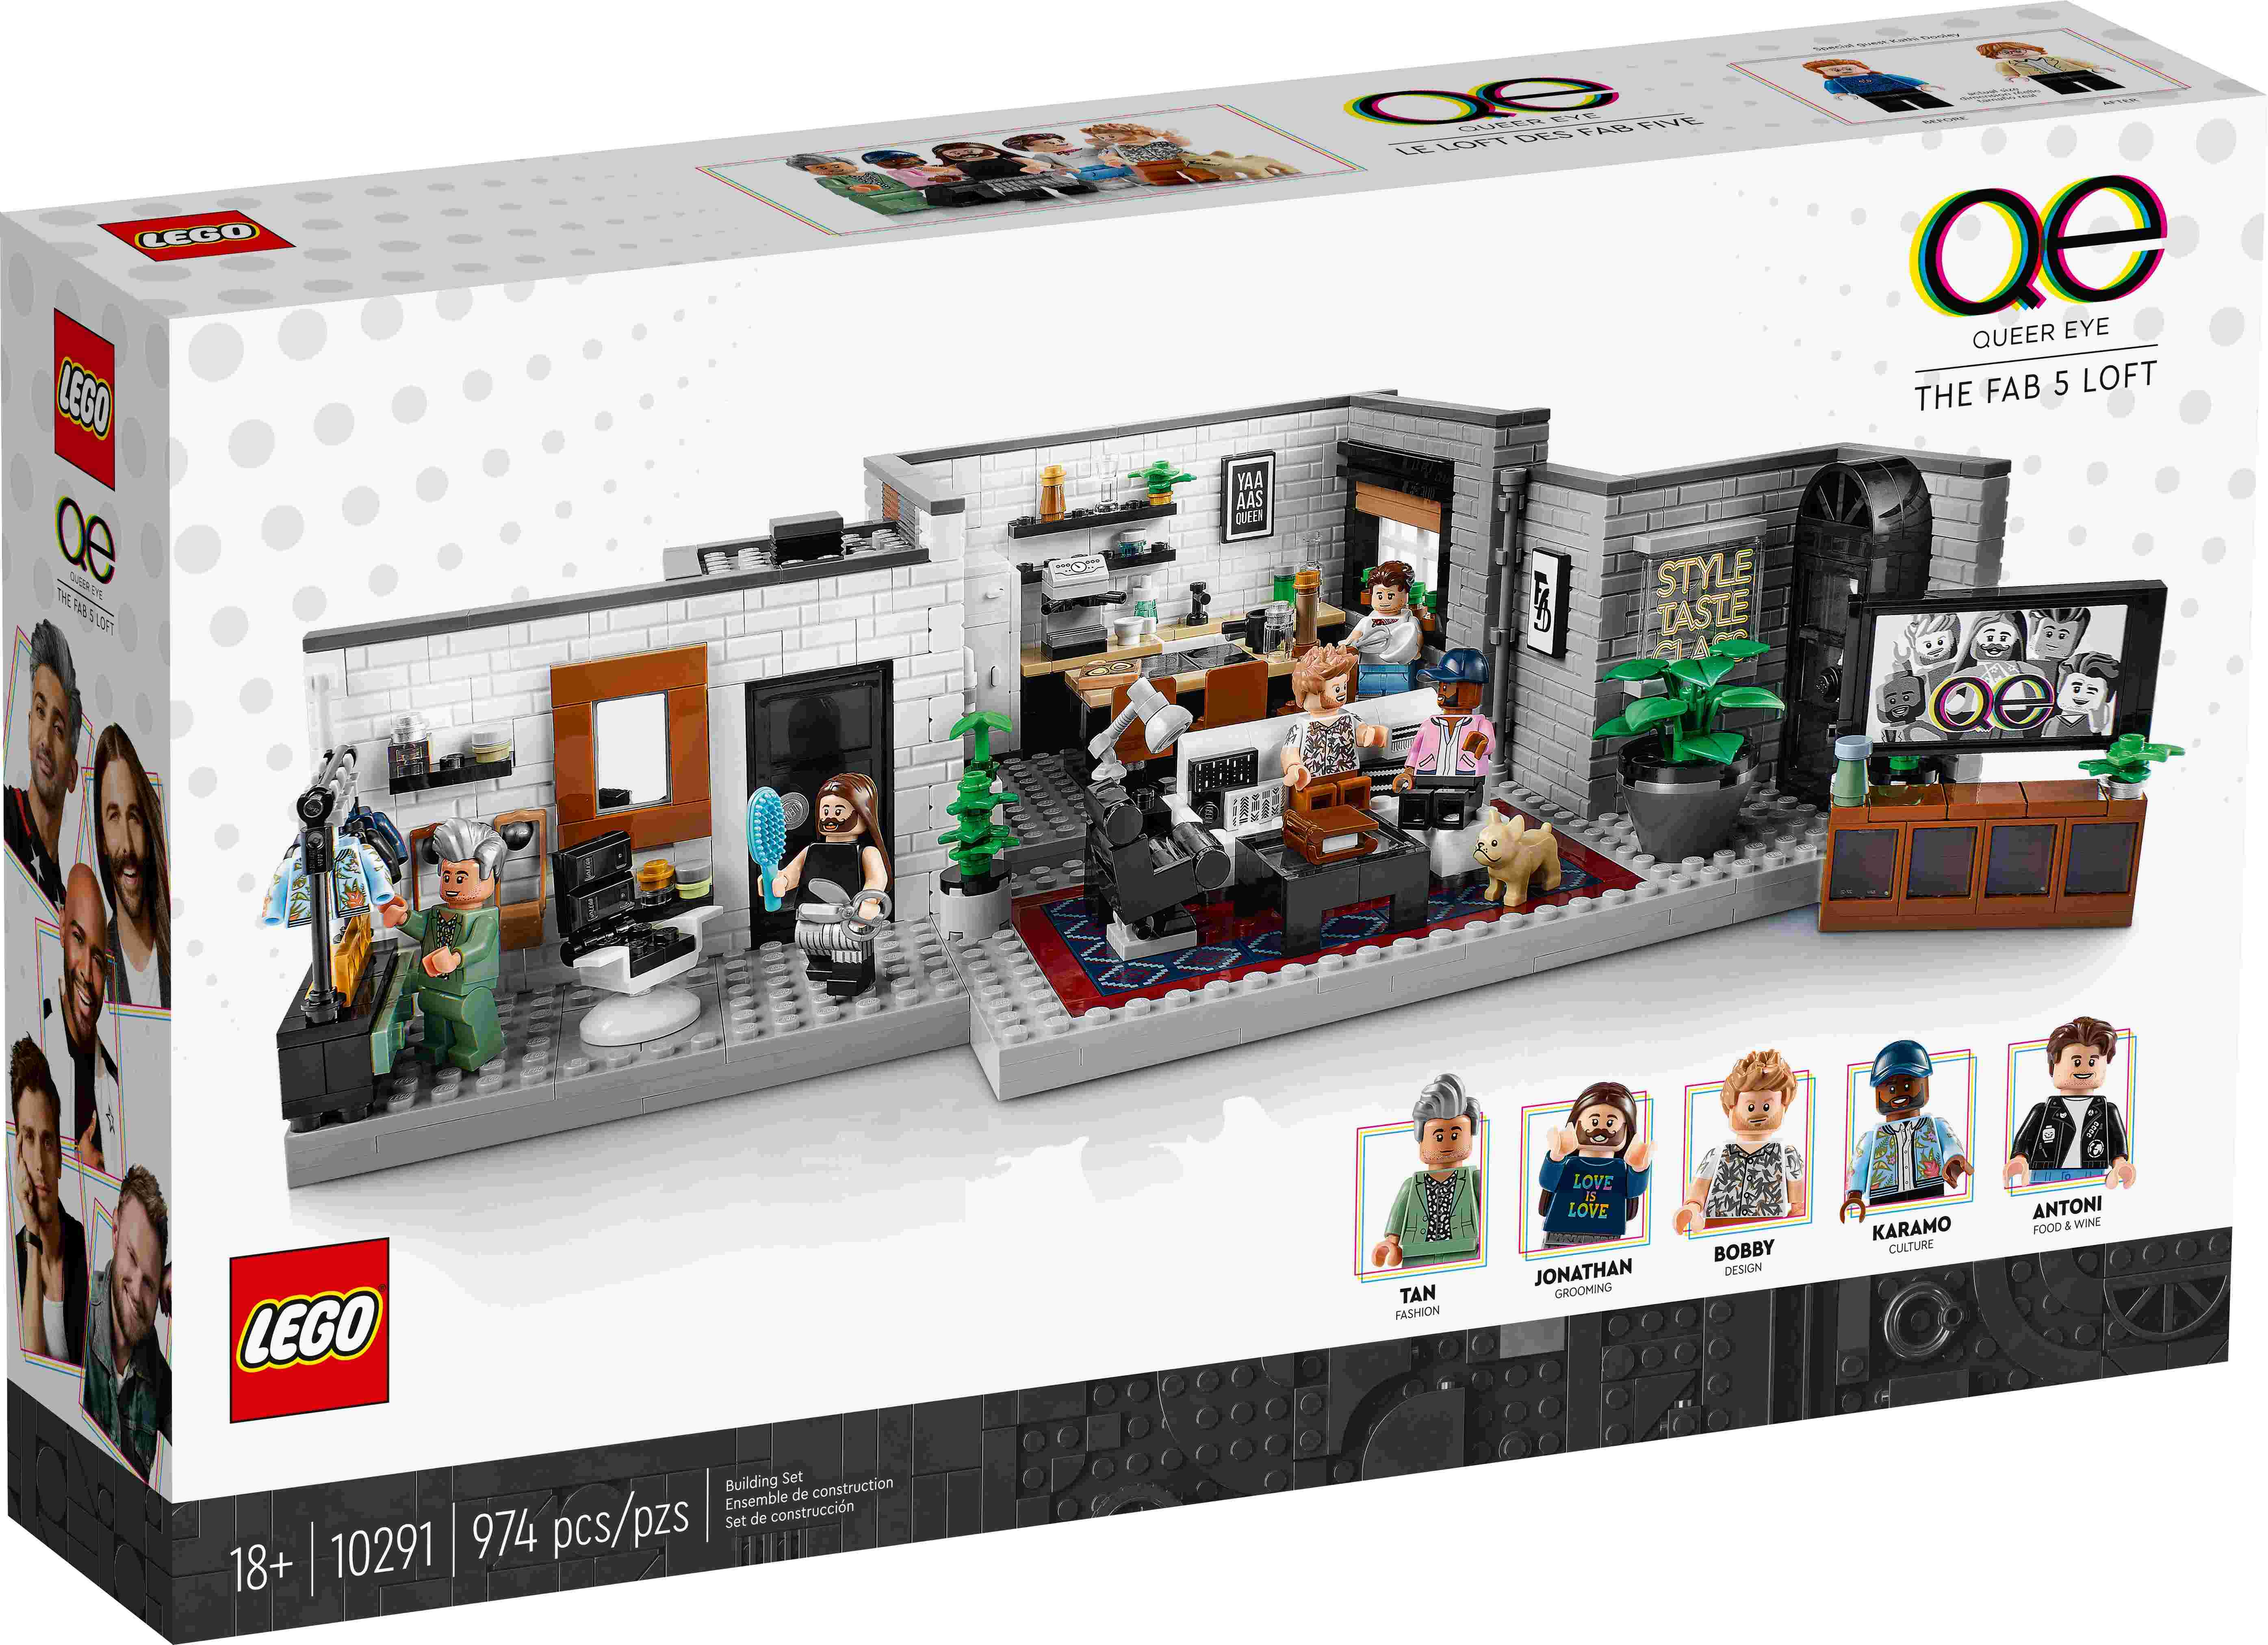 LEGO 10291 Creator Queer Eye Loft